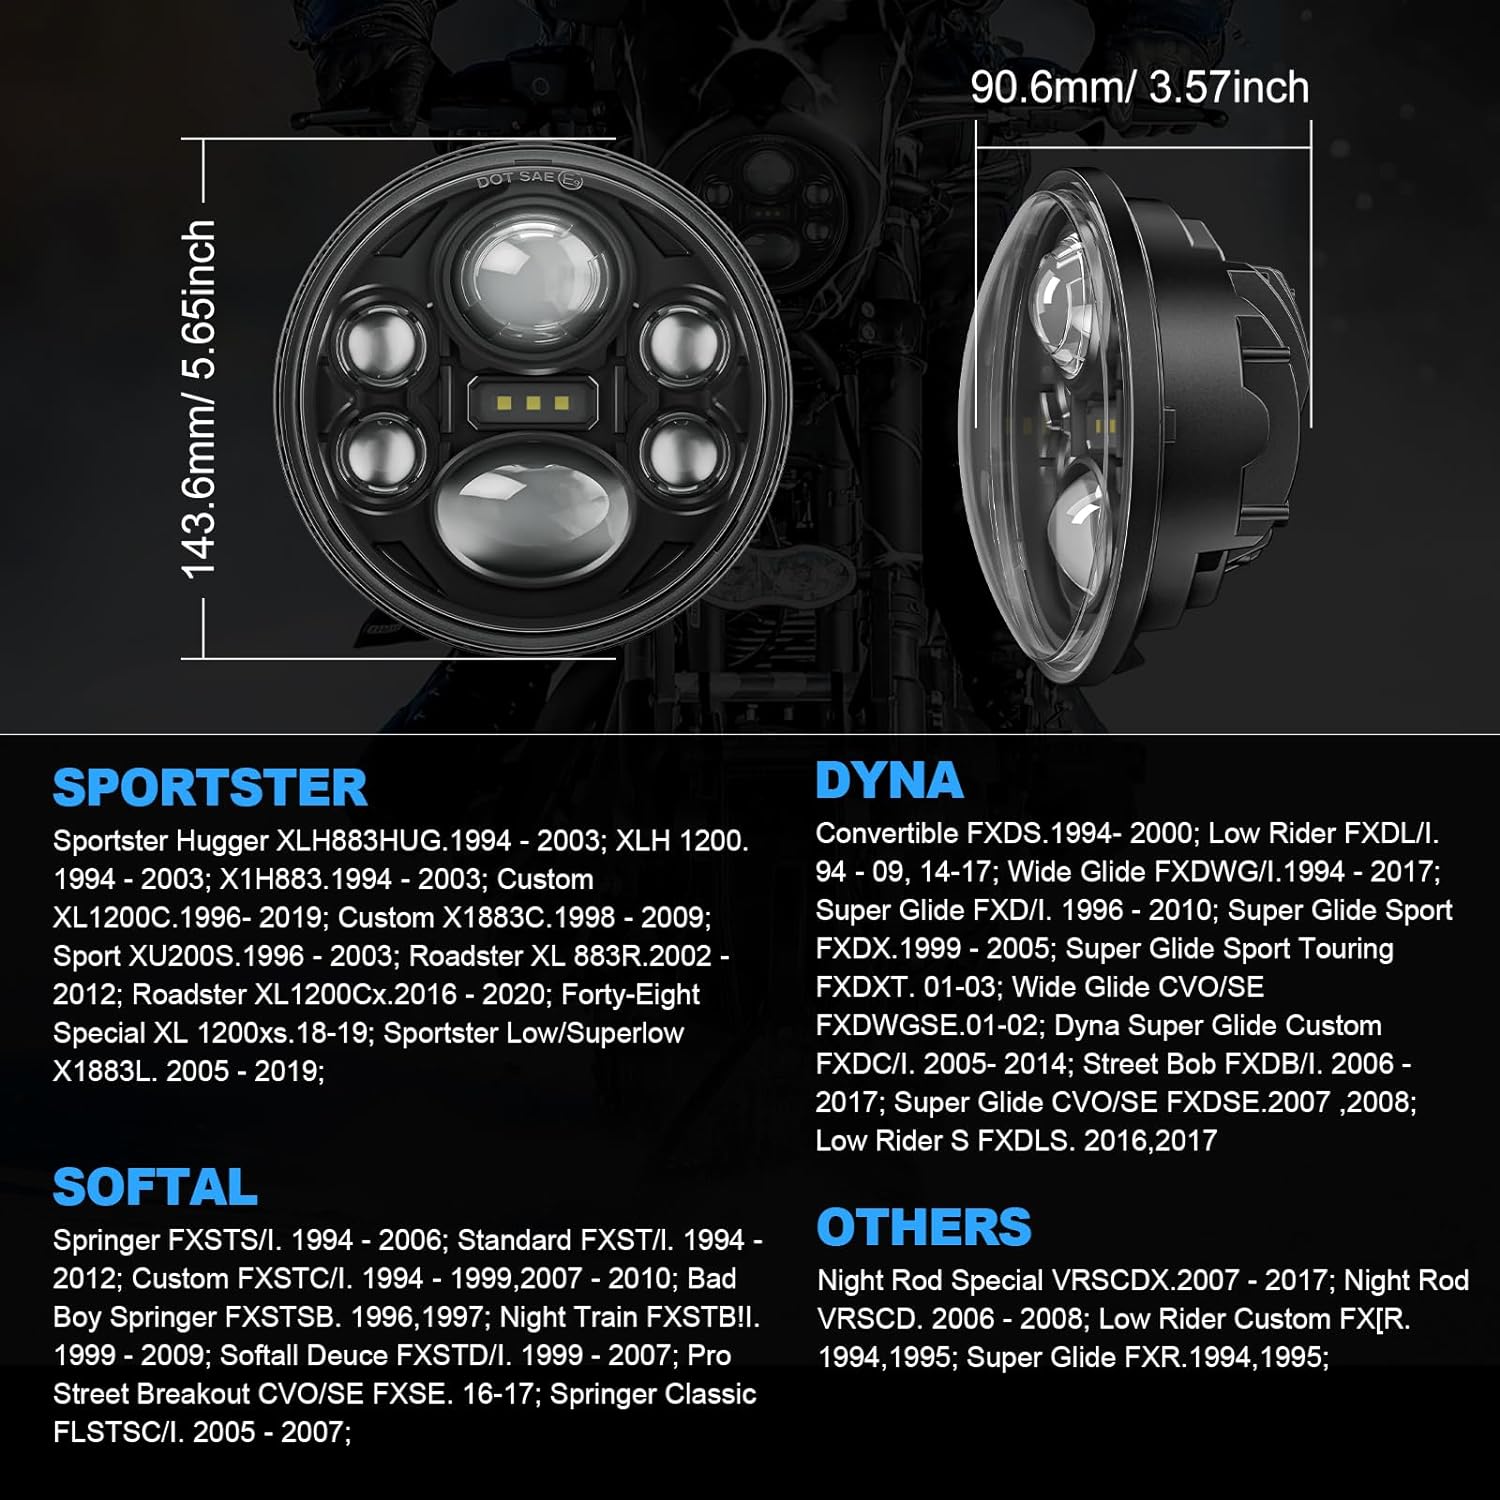 SUPAREE SUPAREE 5.75 LED Headlight Motorcycle for Sportster Dyna Street Bob Night Rod Davidson Product description